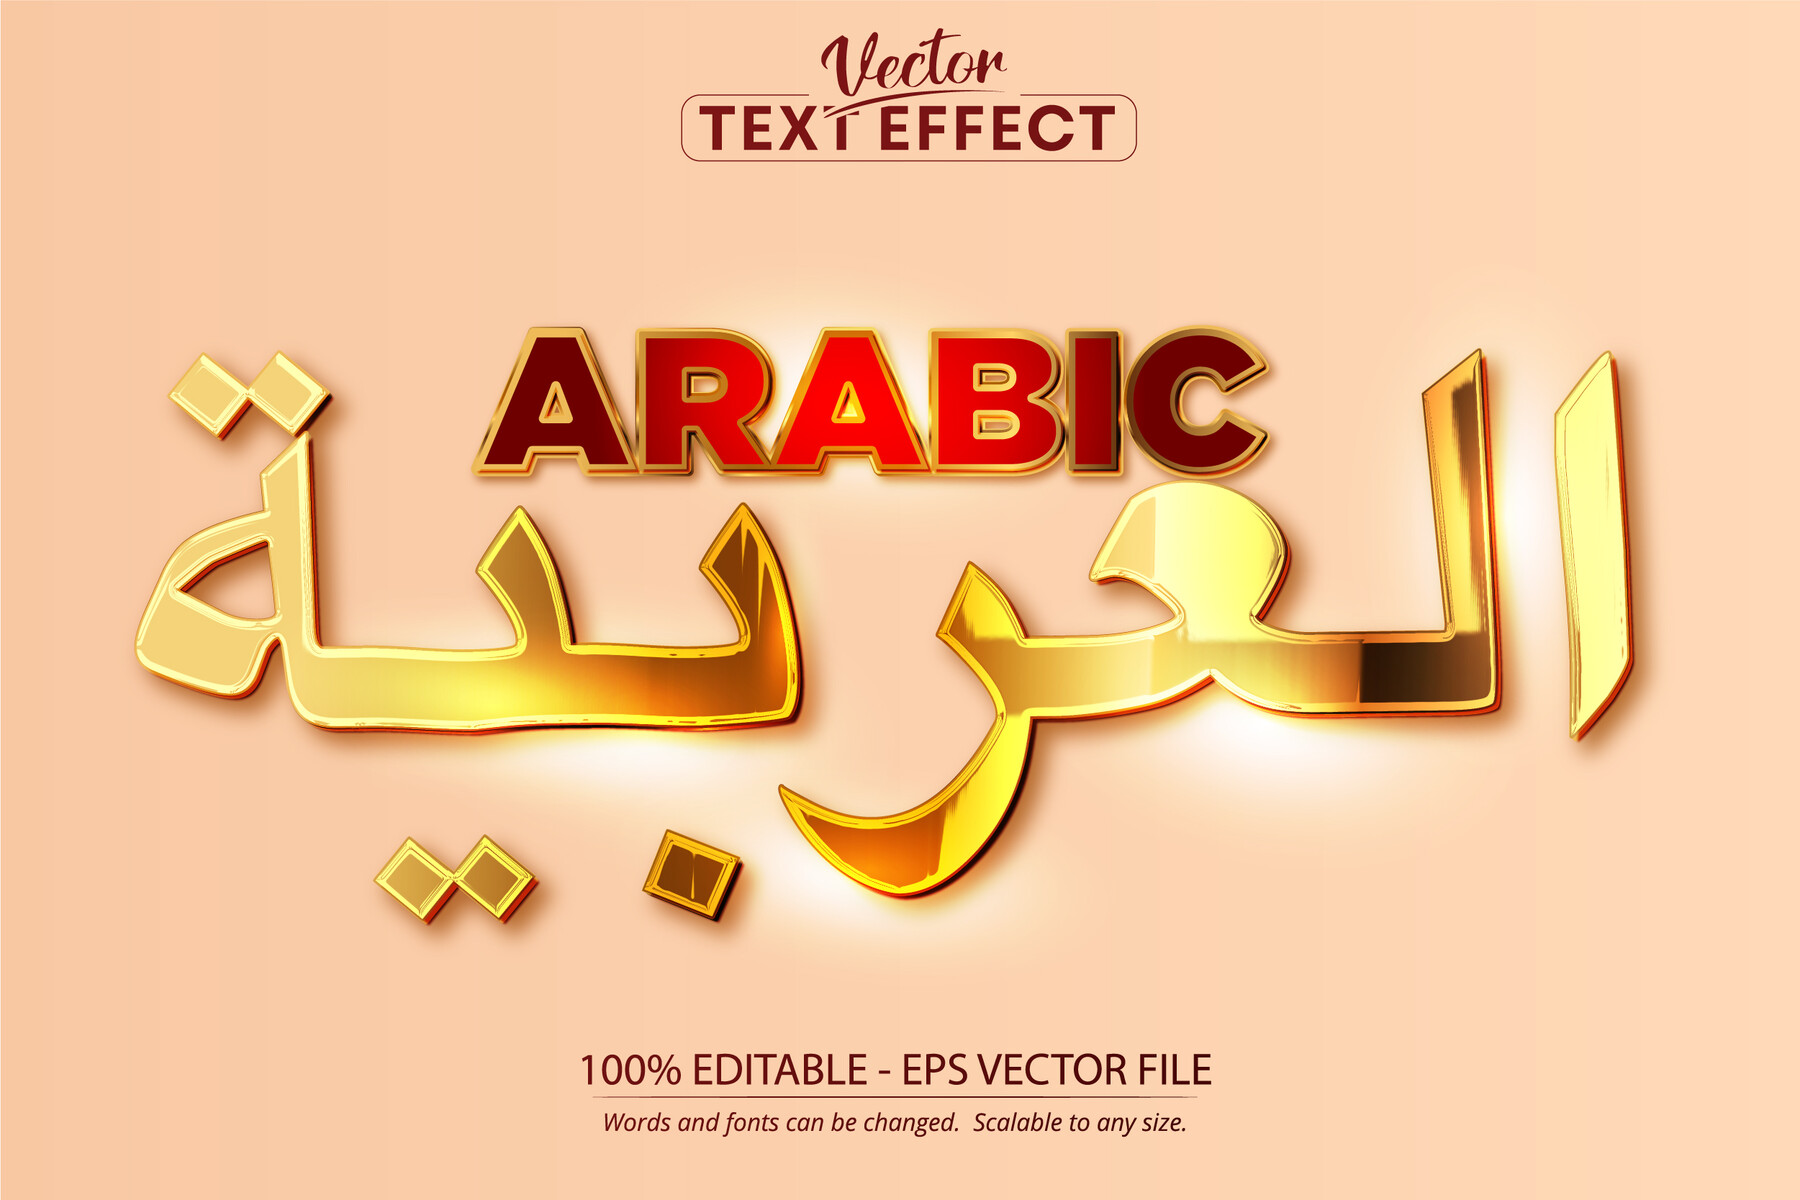 arabic text.jsx after effect download